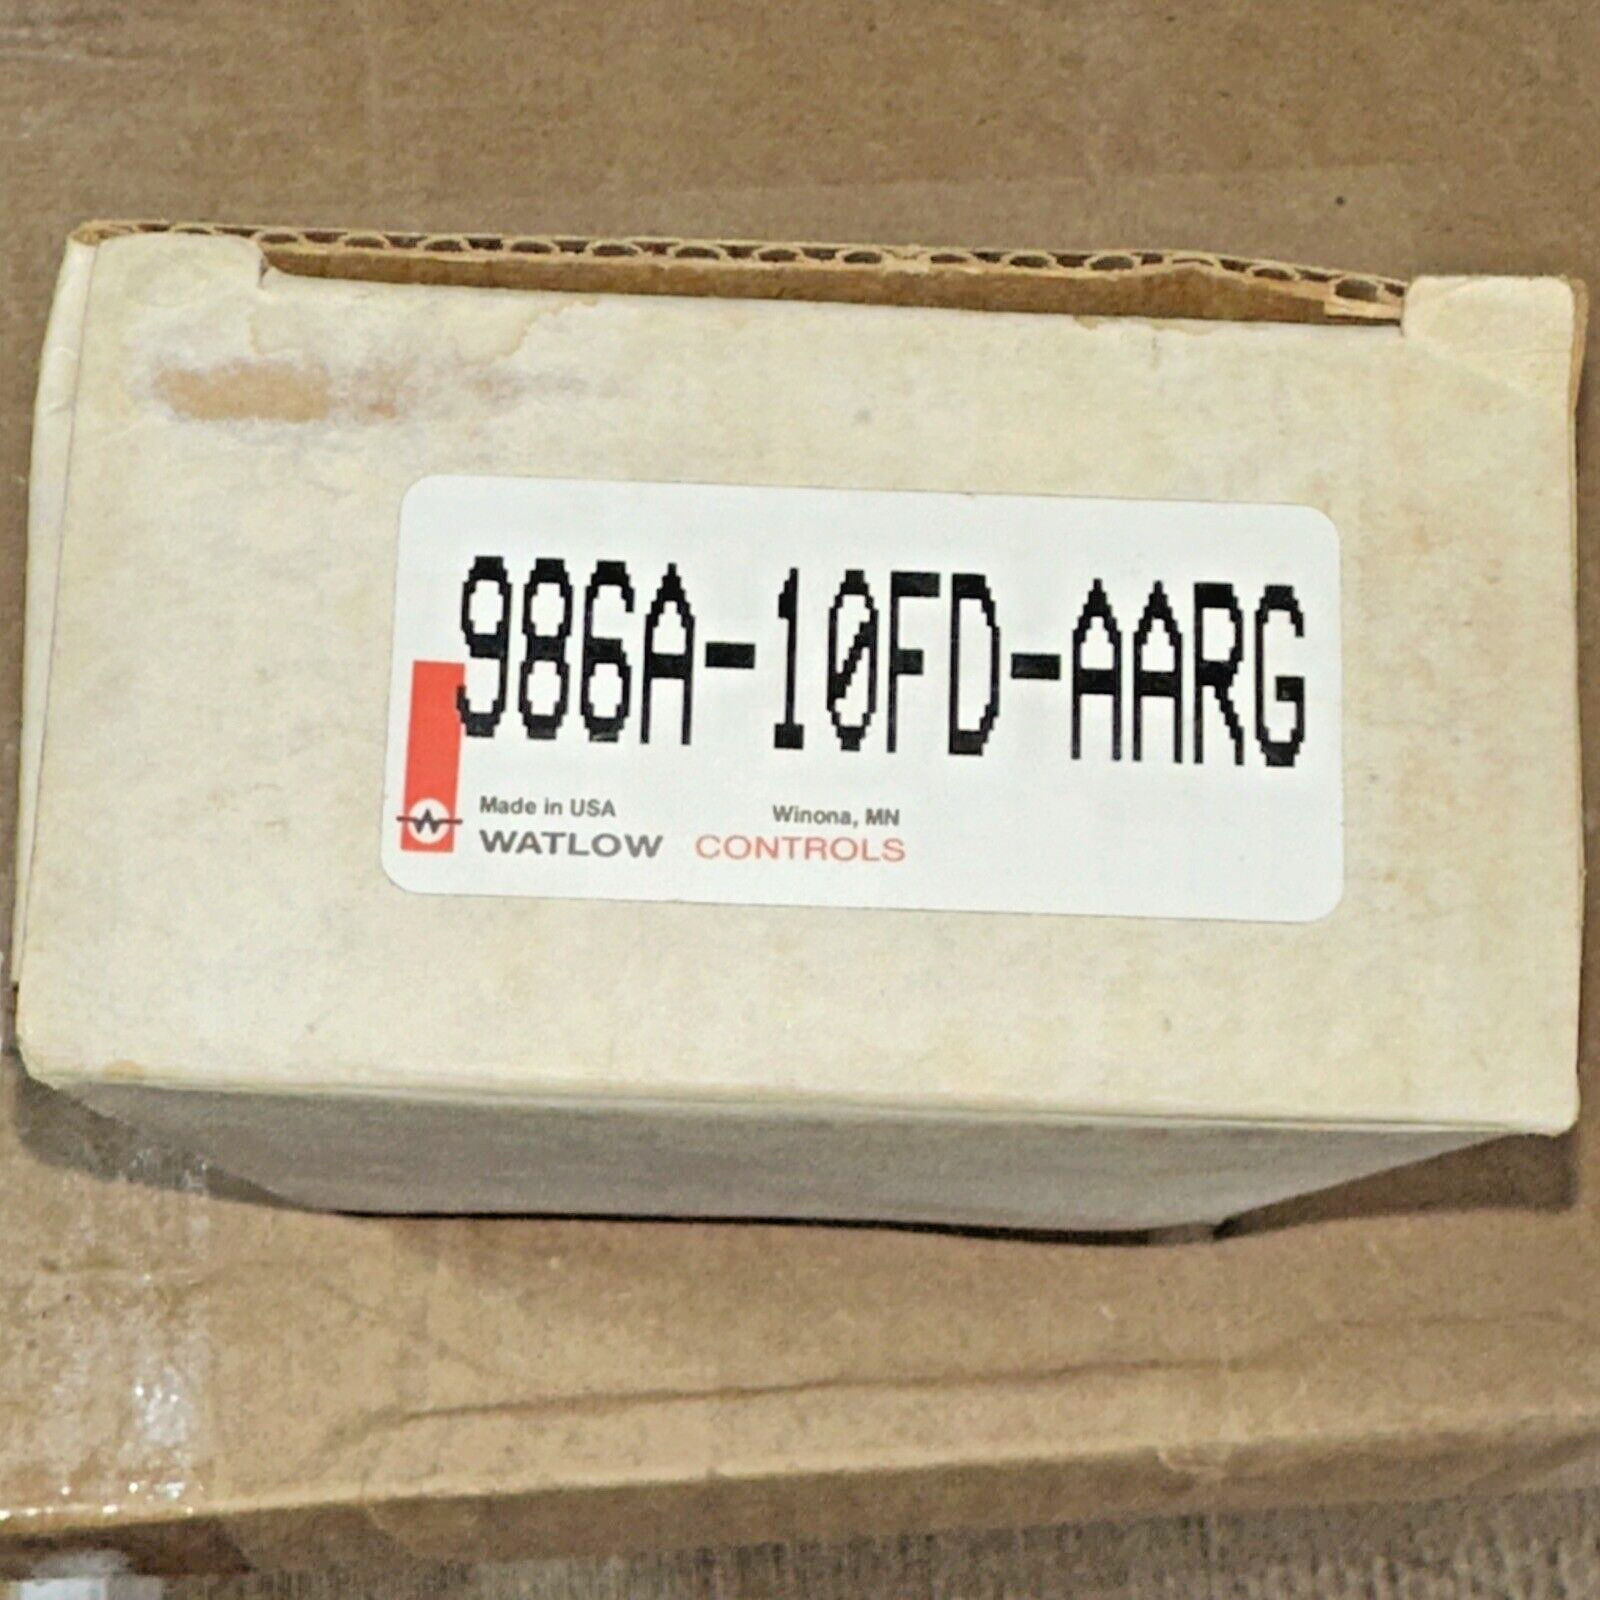 Watlow 986A-10FD-AARG Temperature Controller New Box